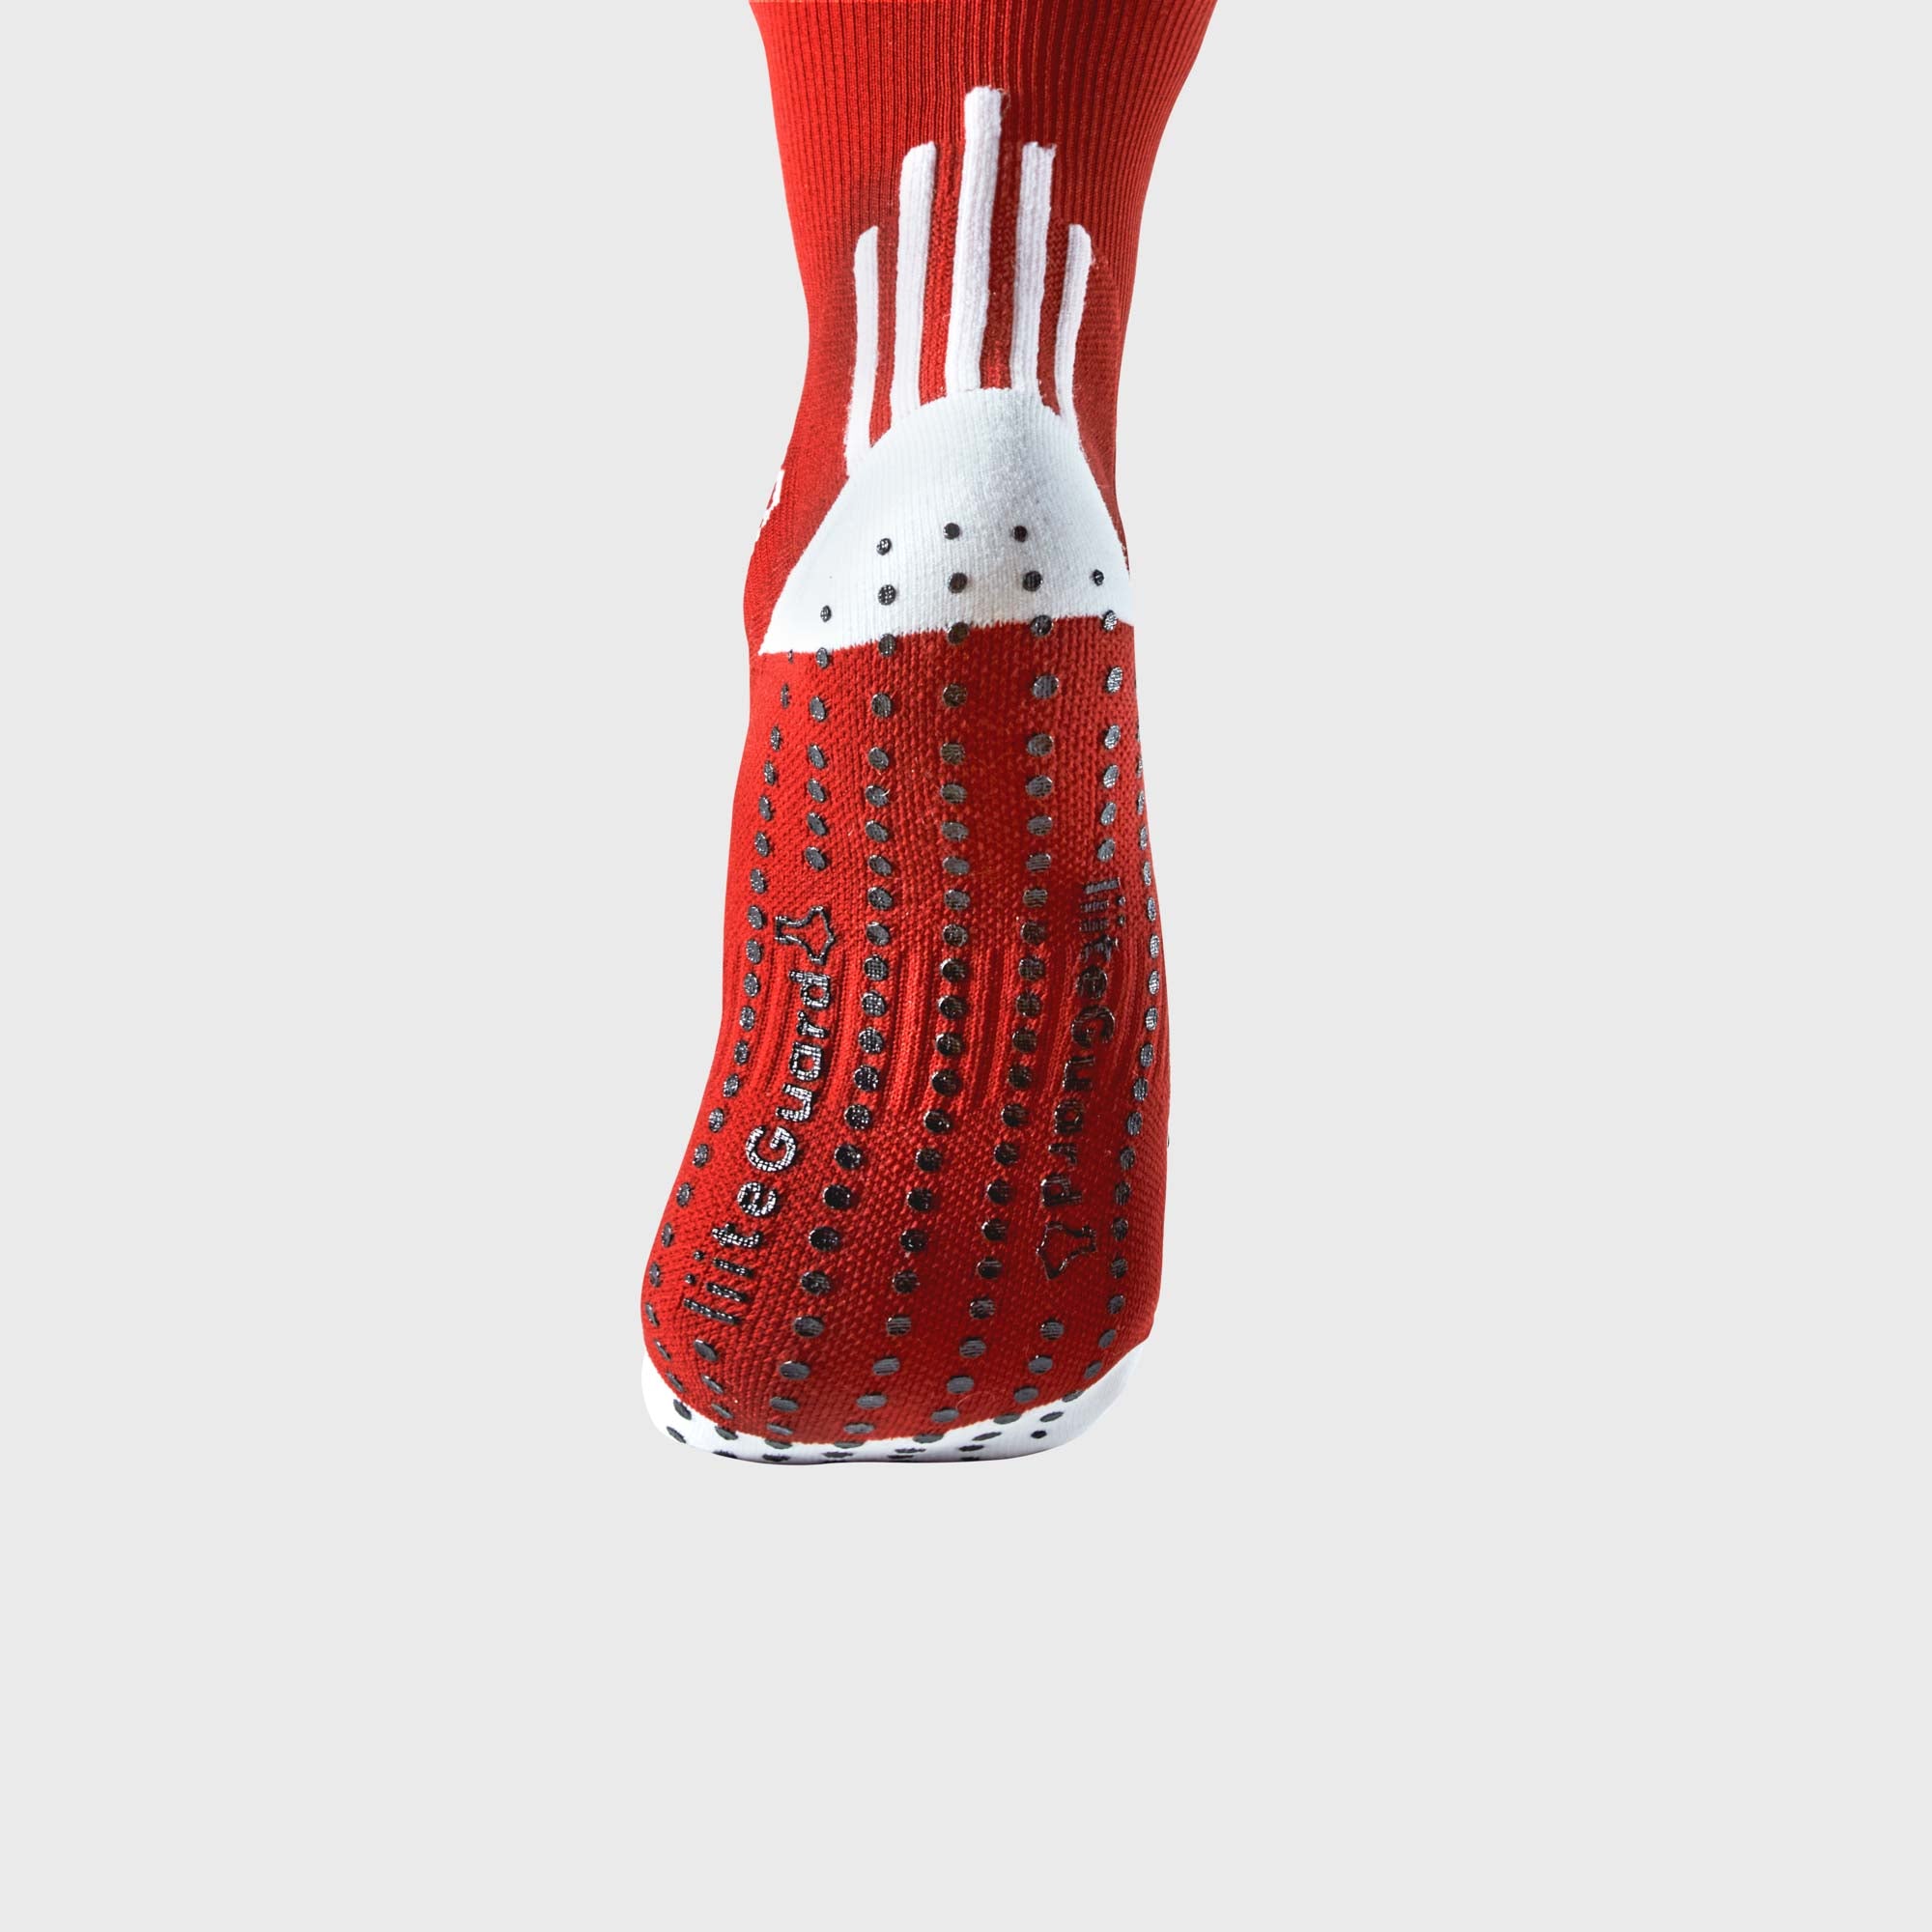 Liiteguard PRO-TECH Medium socks RED